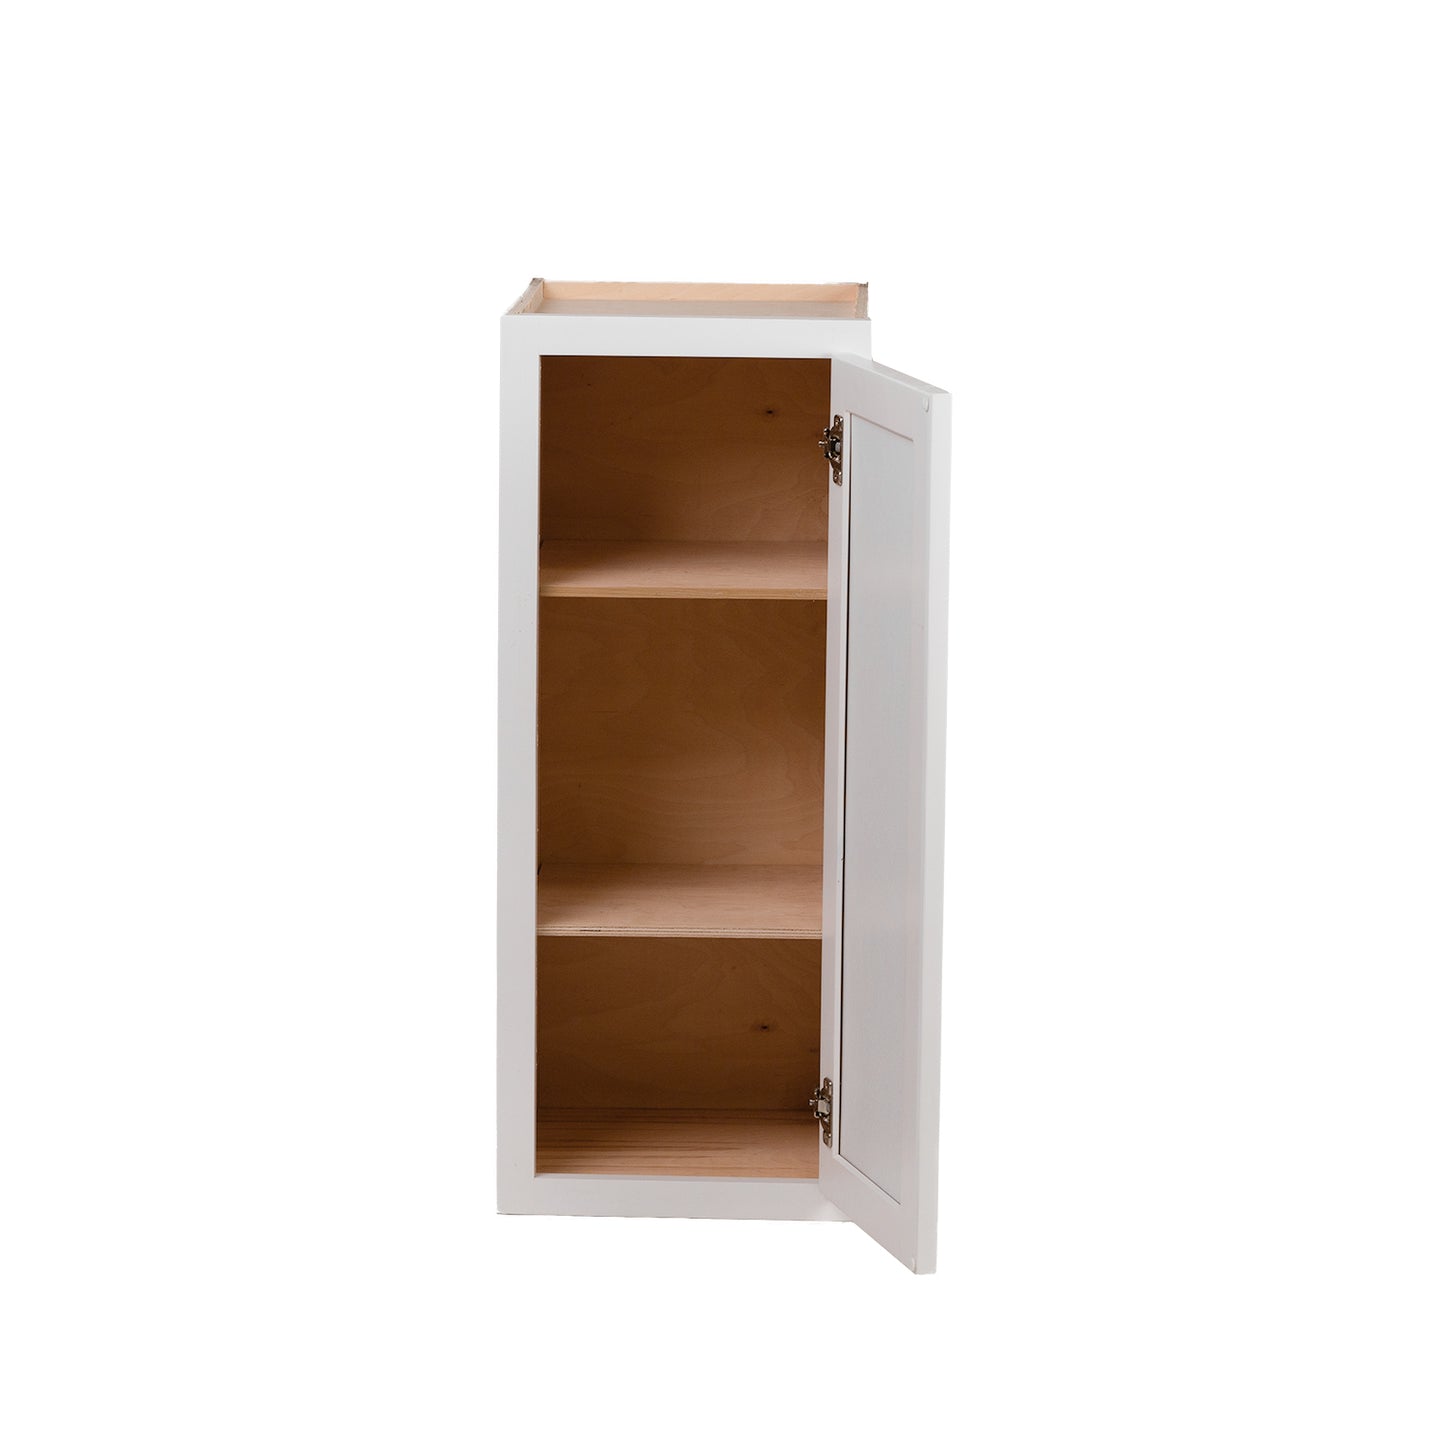 Quicklock RTA (Ready-to-Assemble) Pure White 15"Wx30"Hx12"D Wall Cabinet